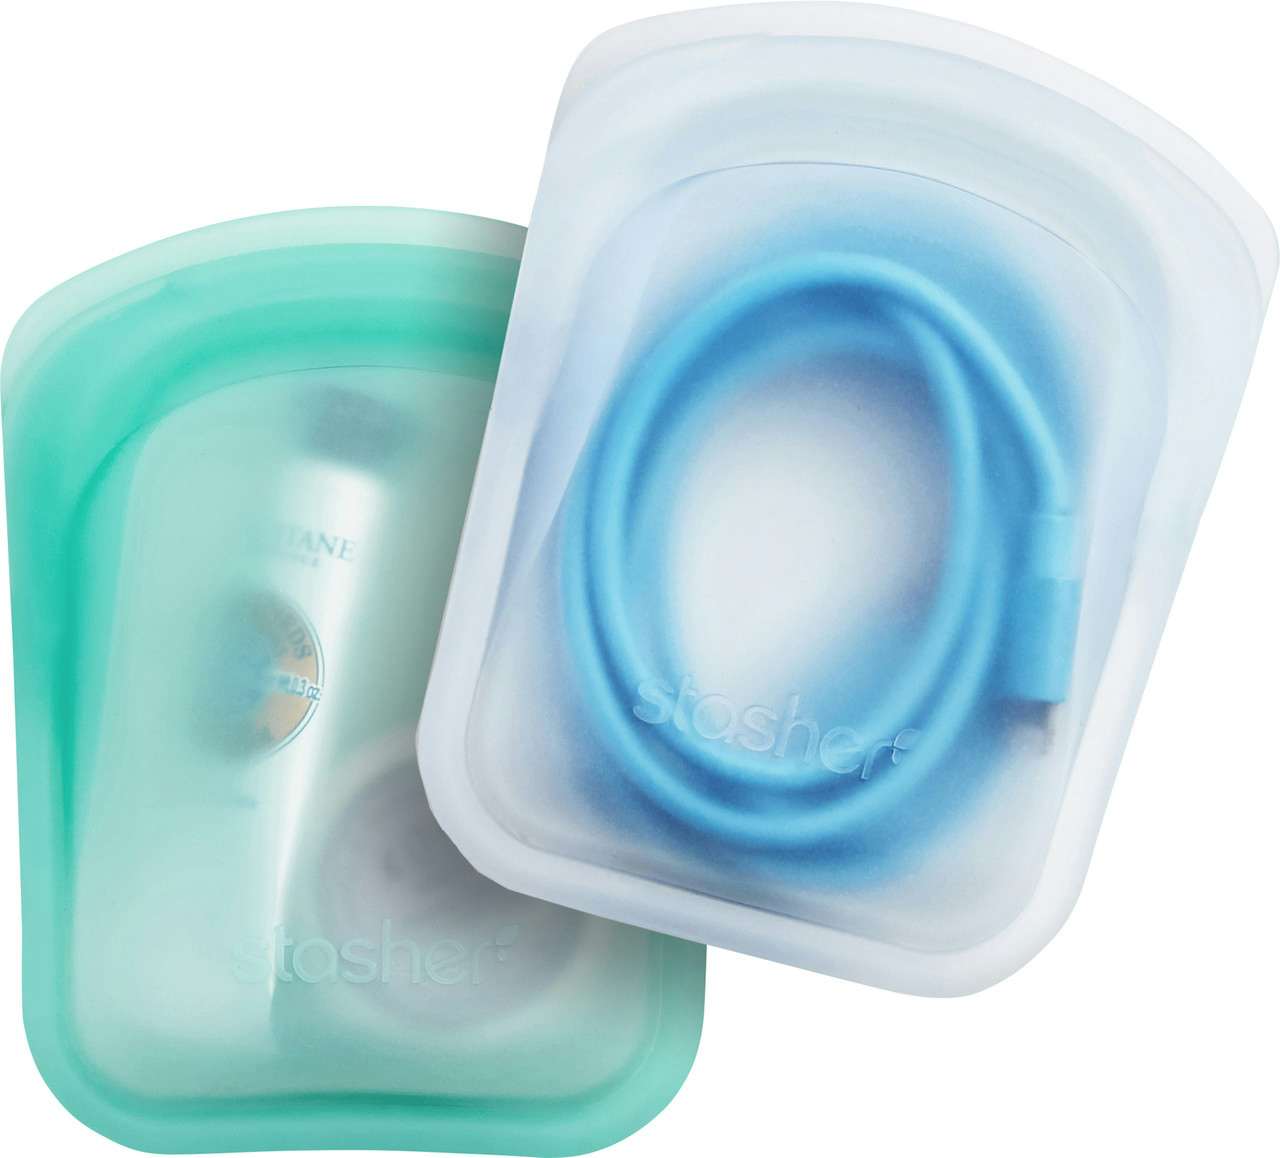 Sac réutilisable Pocket (2) Transparent/Aqua